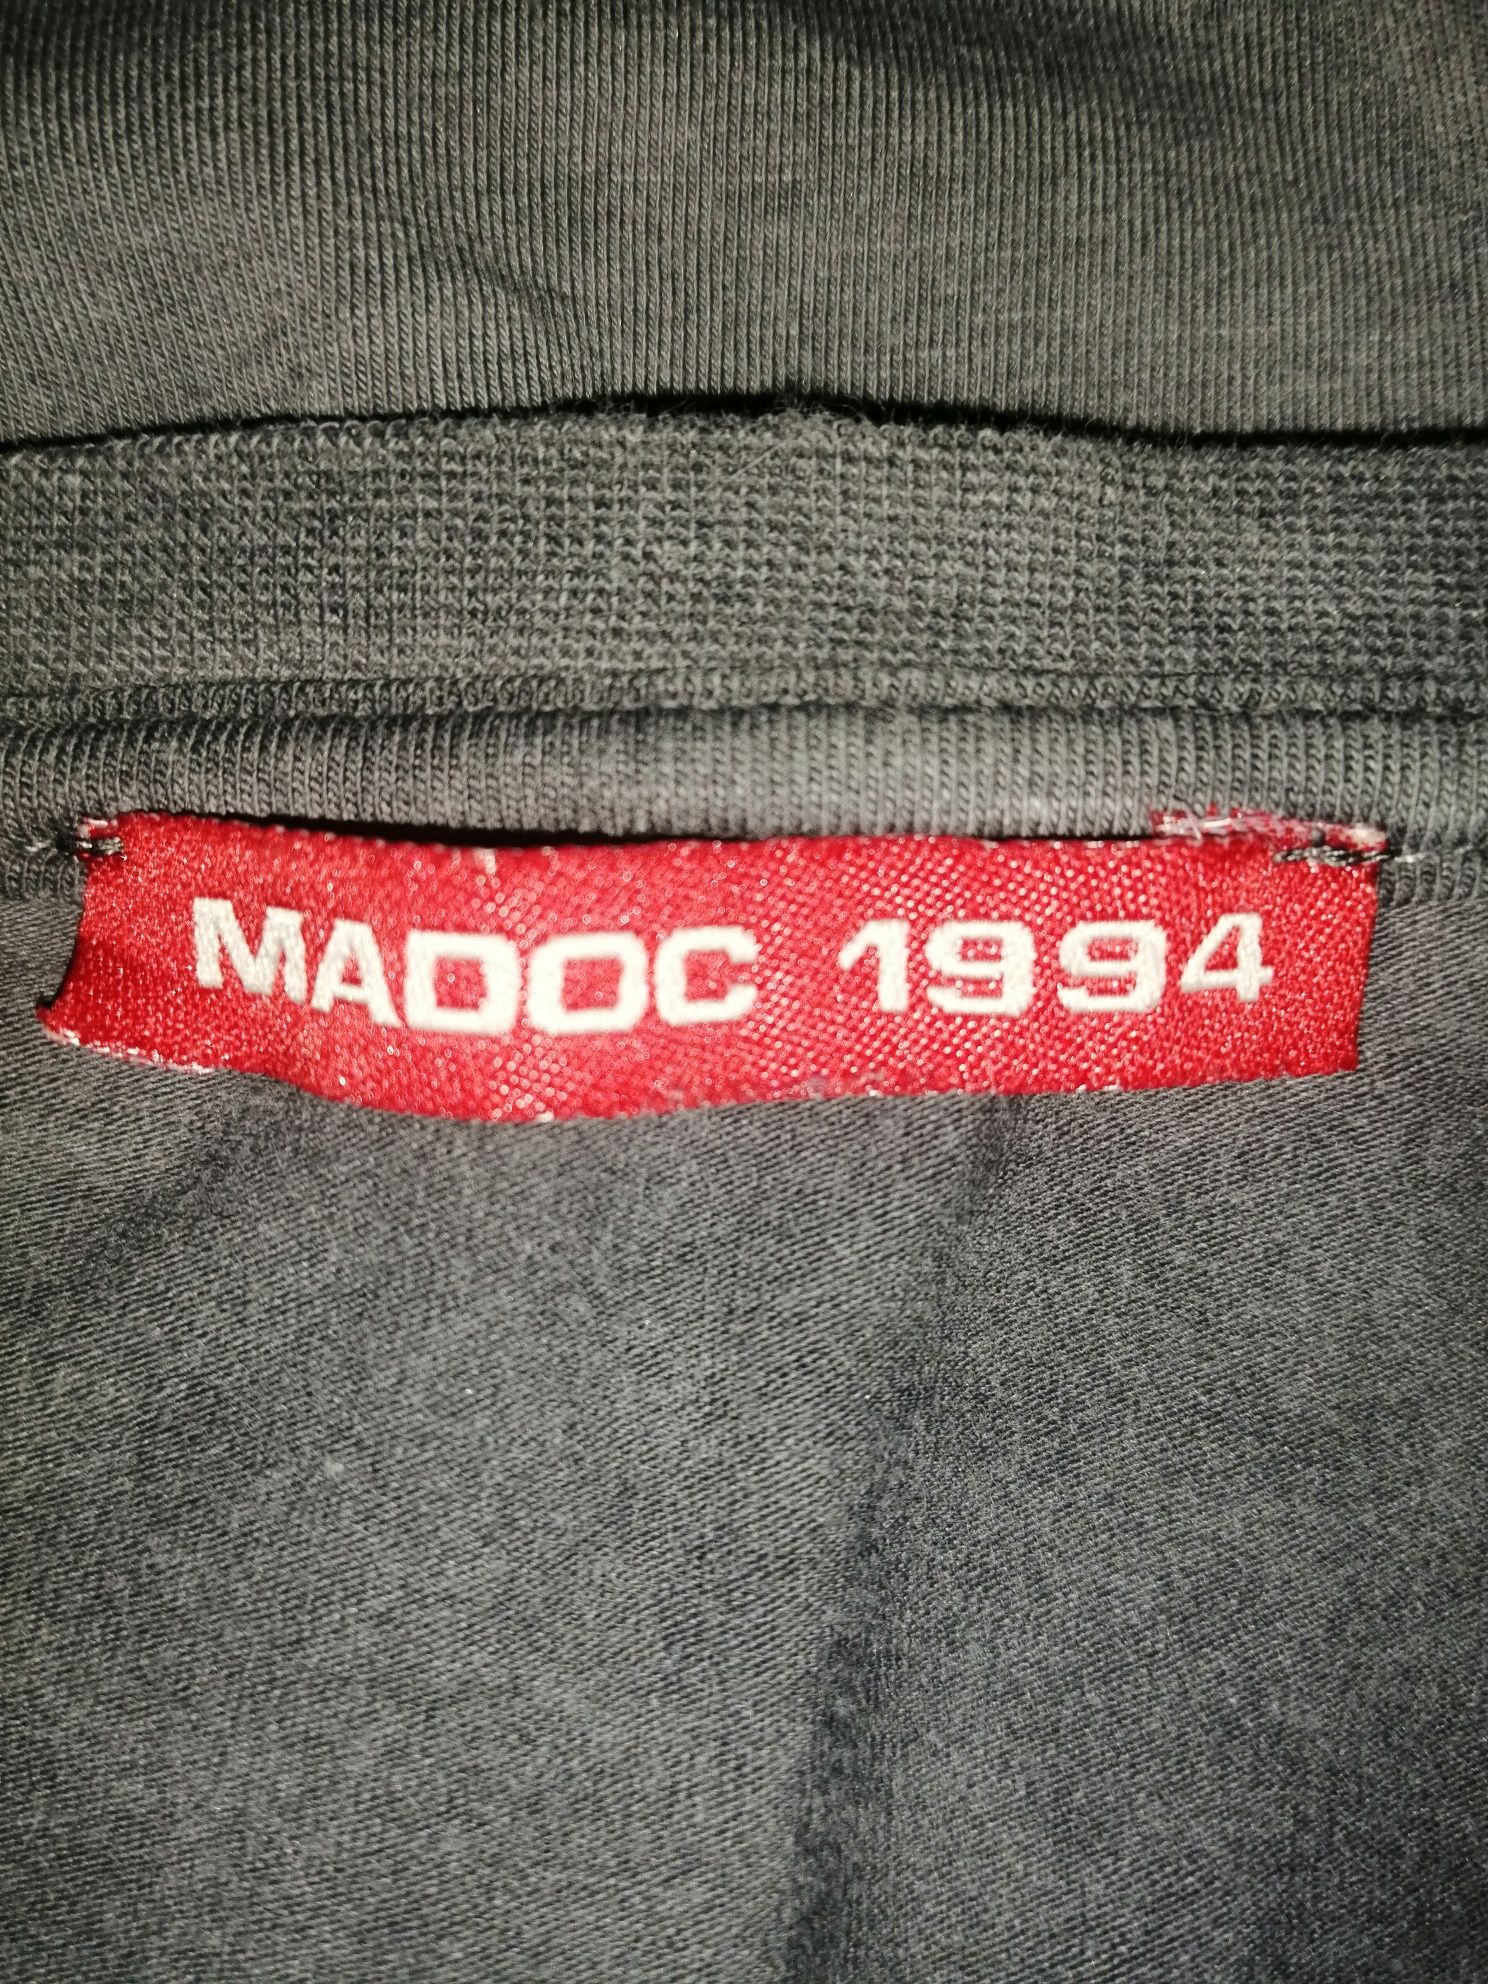 Продам футболку Madoc, размер L-XL